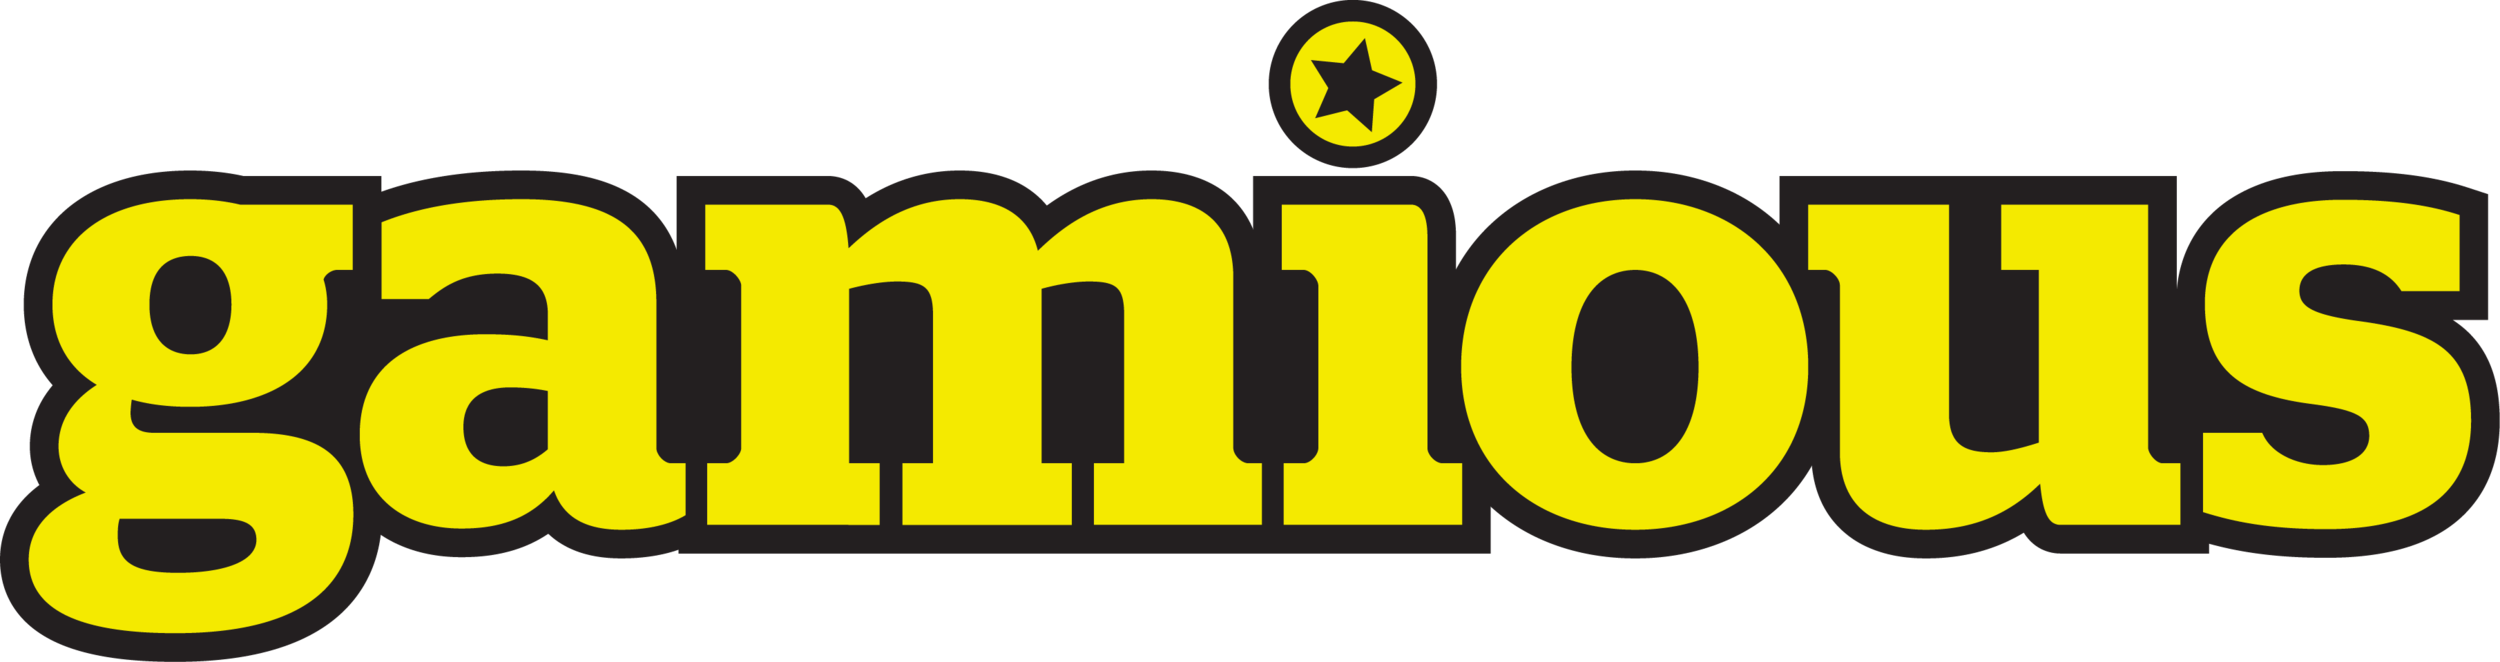 Gamious_Logo_large.png